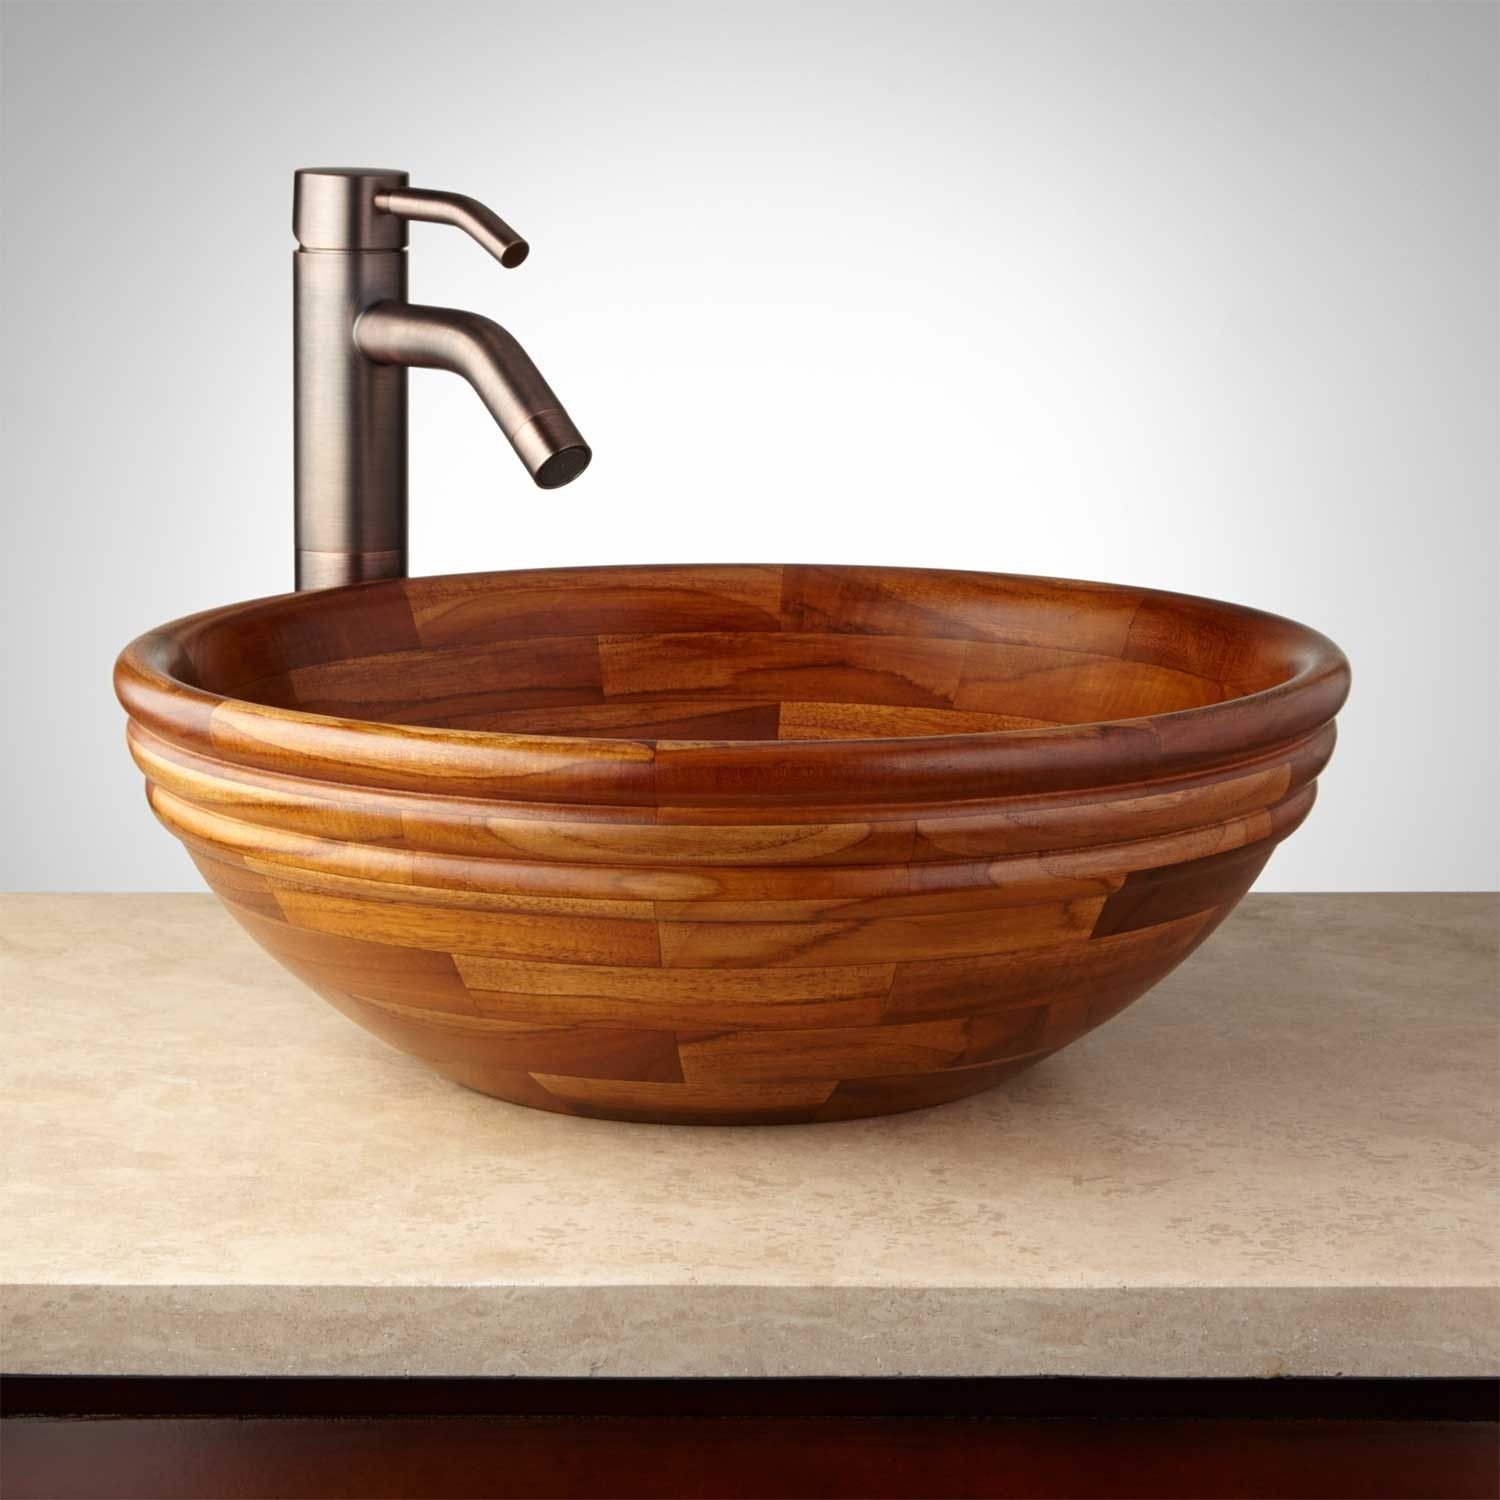 Раковина из дерева в ванную. Unique Wood Design раковина. Раковина чаша высокая. Раковина из тика. Деревянная ванна Марко Треви.